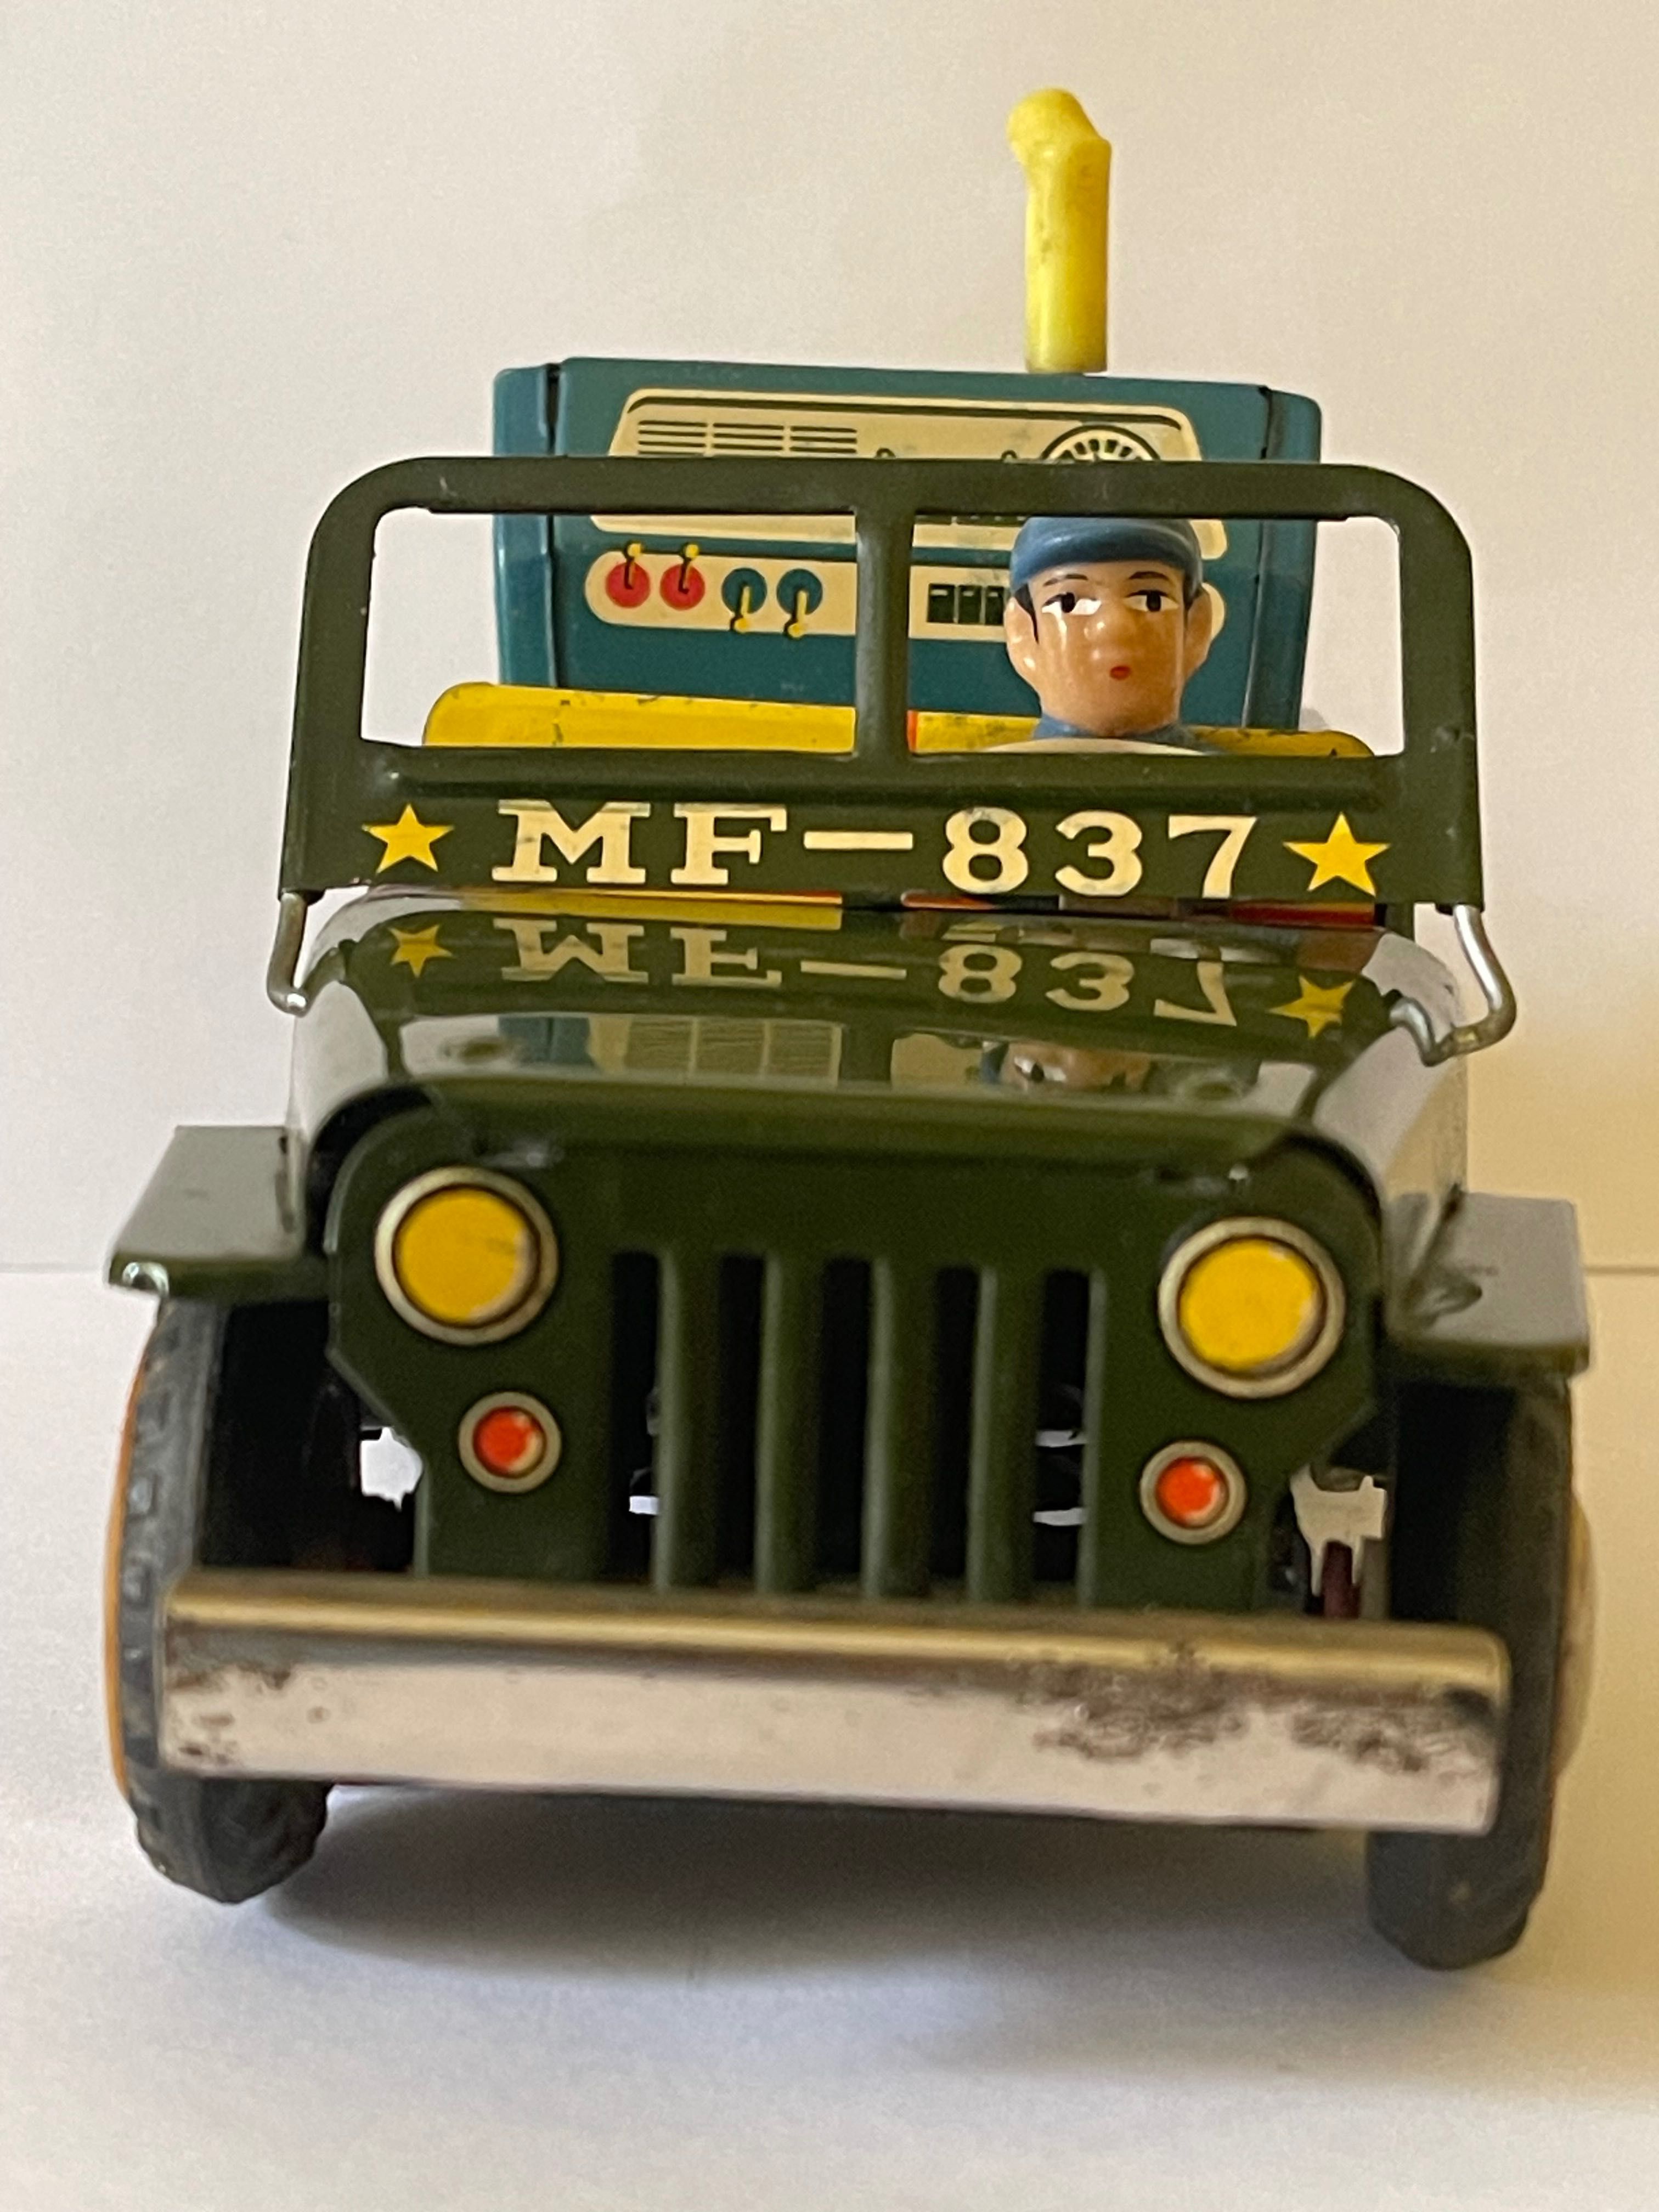 Macheta Tablă /Jeep Militar Radar Vechi( anii 70)